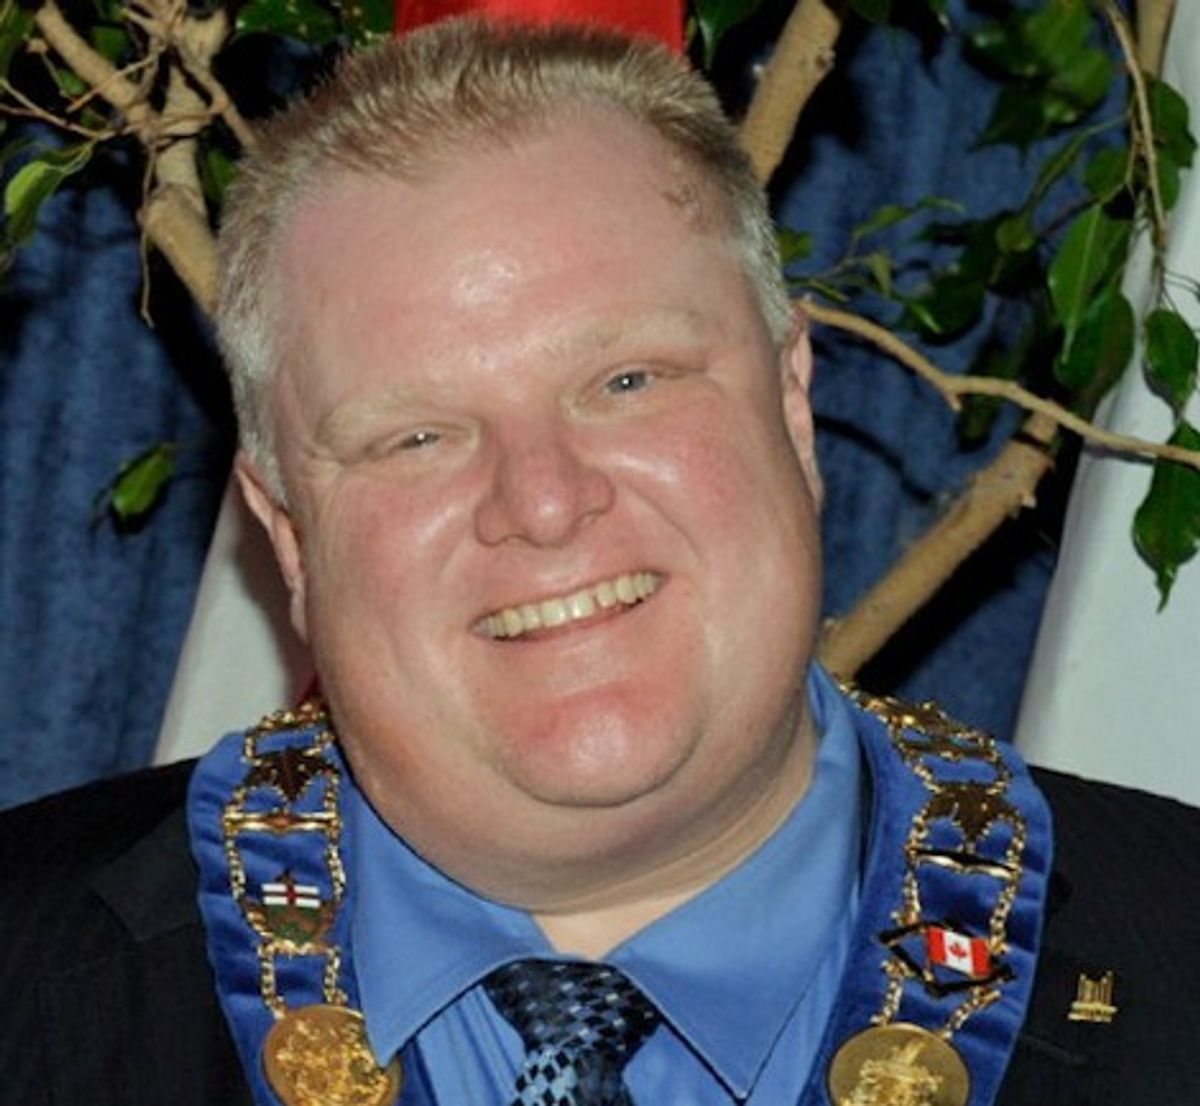  Mayor Rob Ford (Wikimedia)        